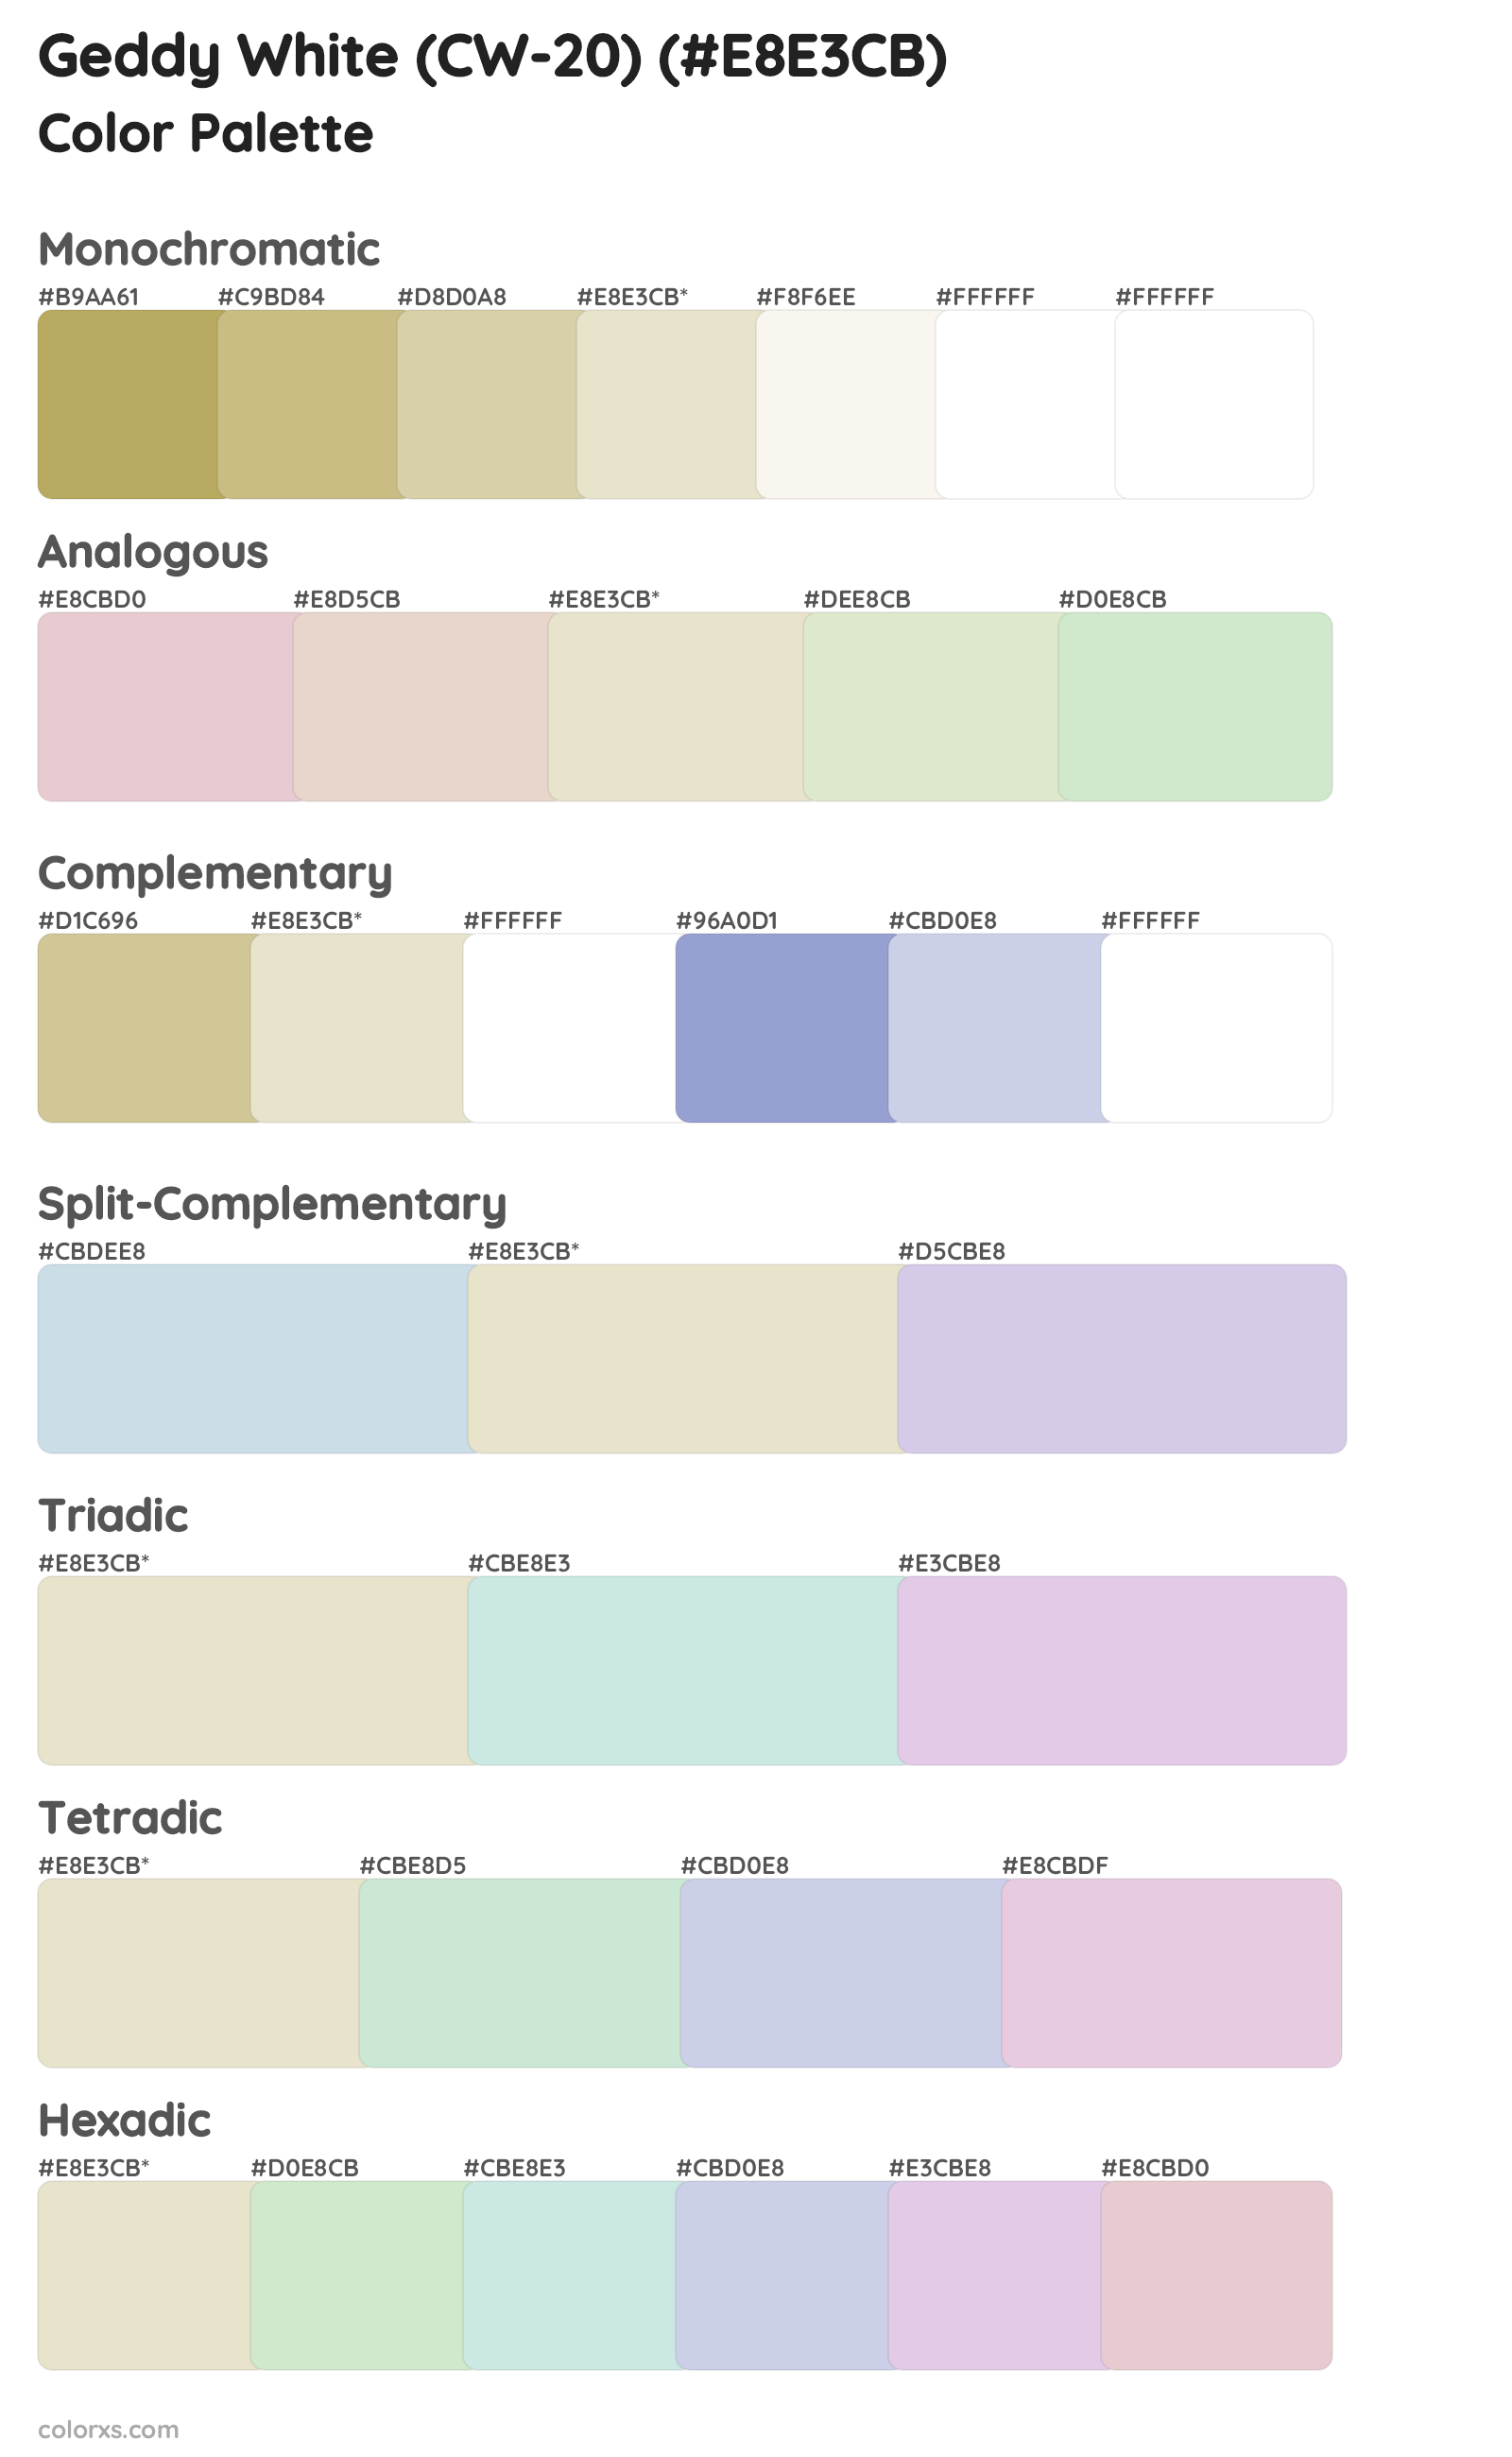 Geddy White (CW-20) Color Scheme Palettes